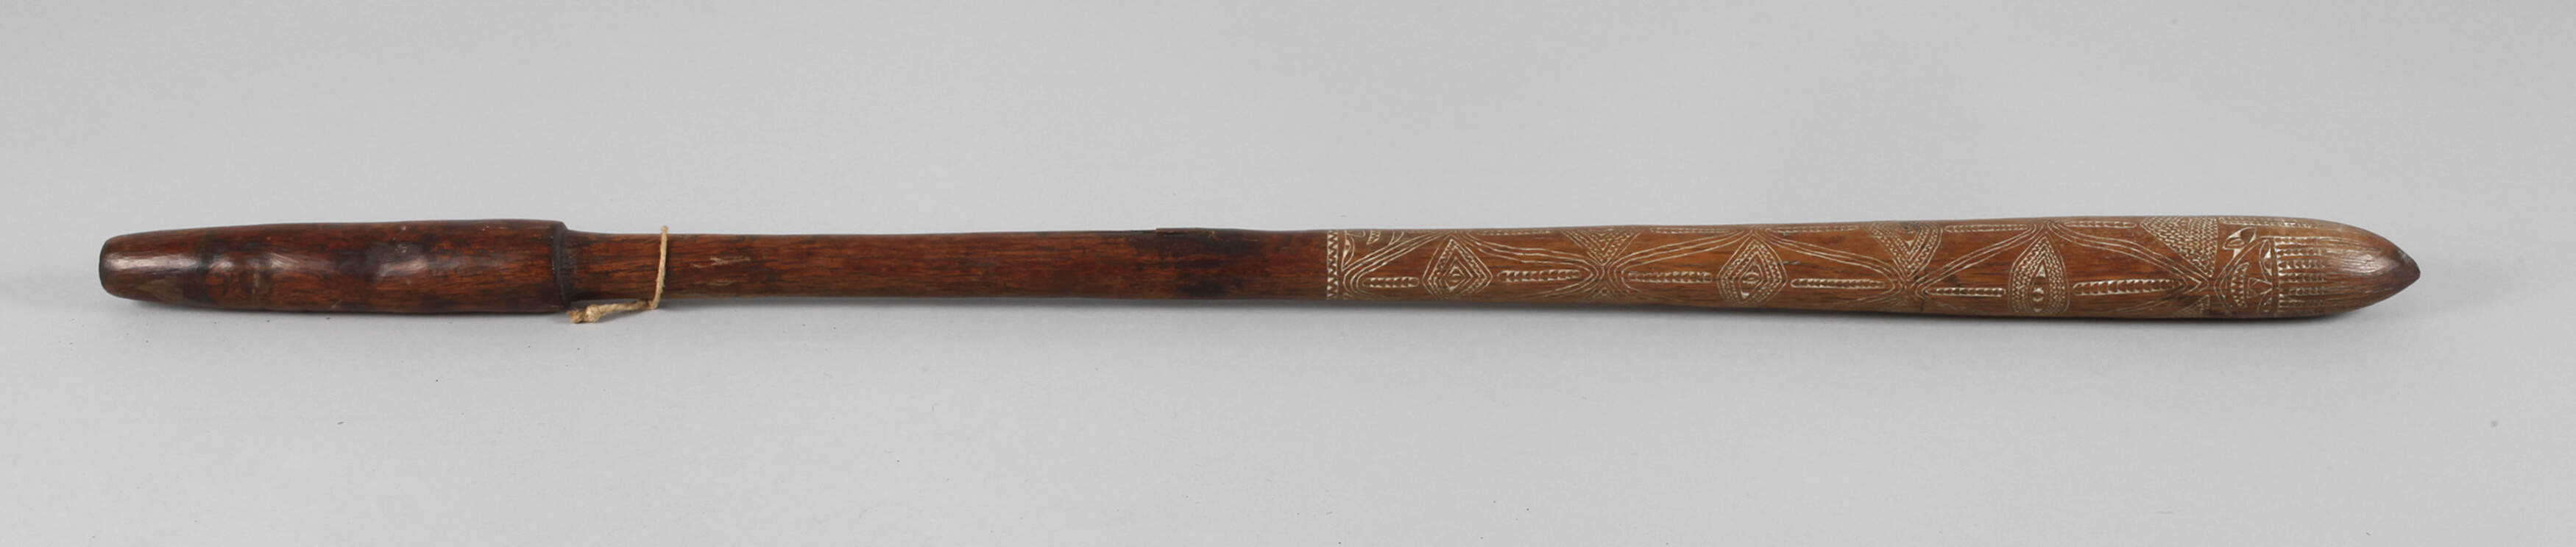 Maori Schläger-Waffe